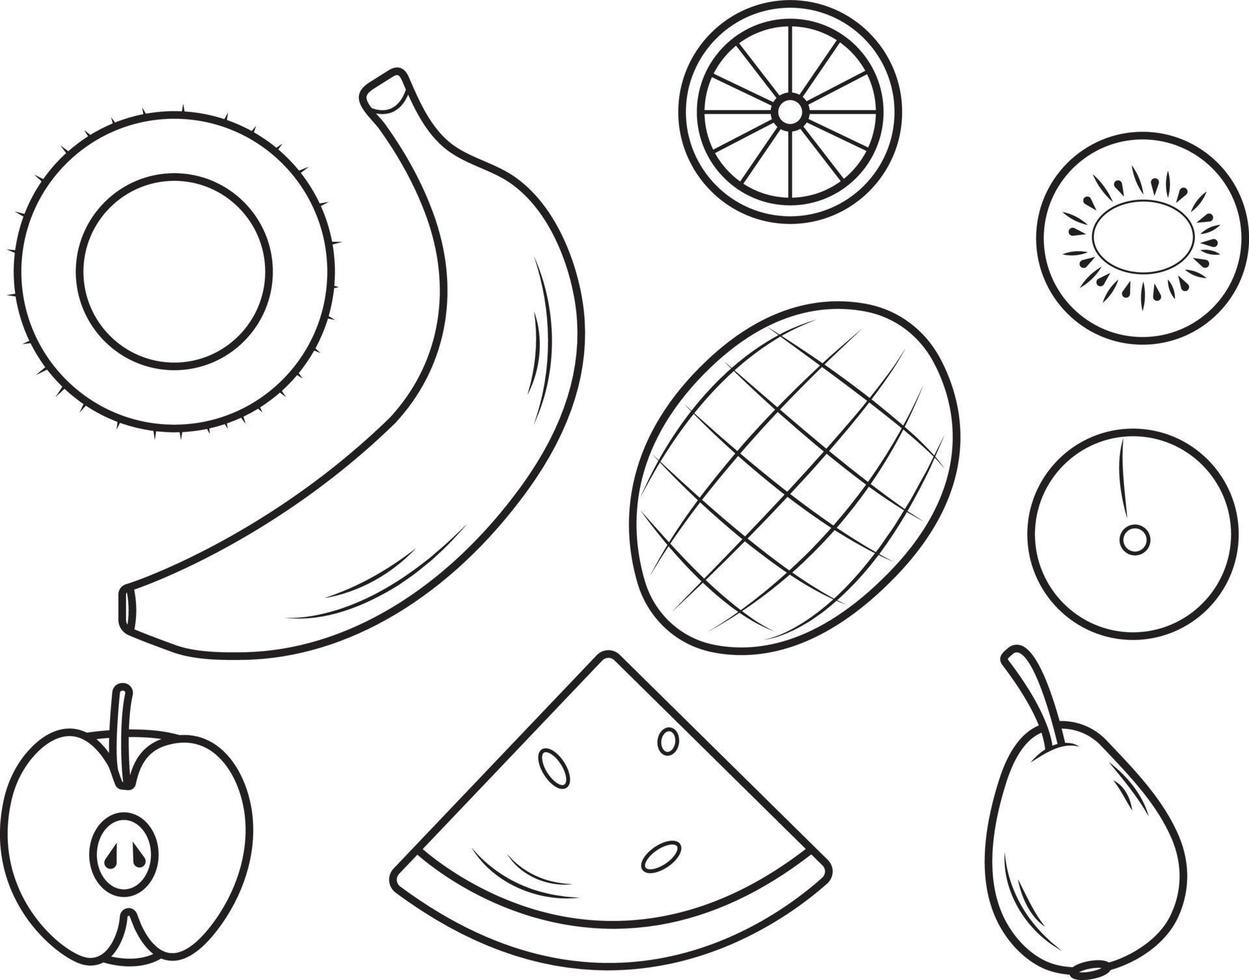 Apfel, Banane, Mango, Kiwi, Pfirsich, Kokosnuss und Wassermelone. Vektor-Illustration vektor